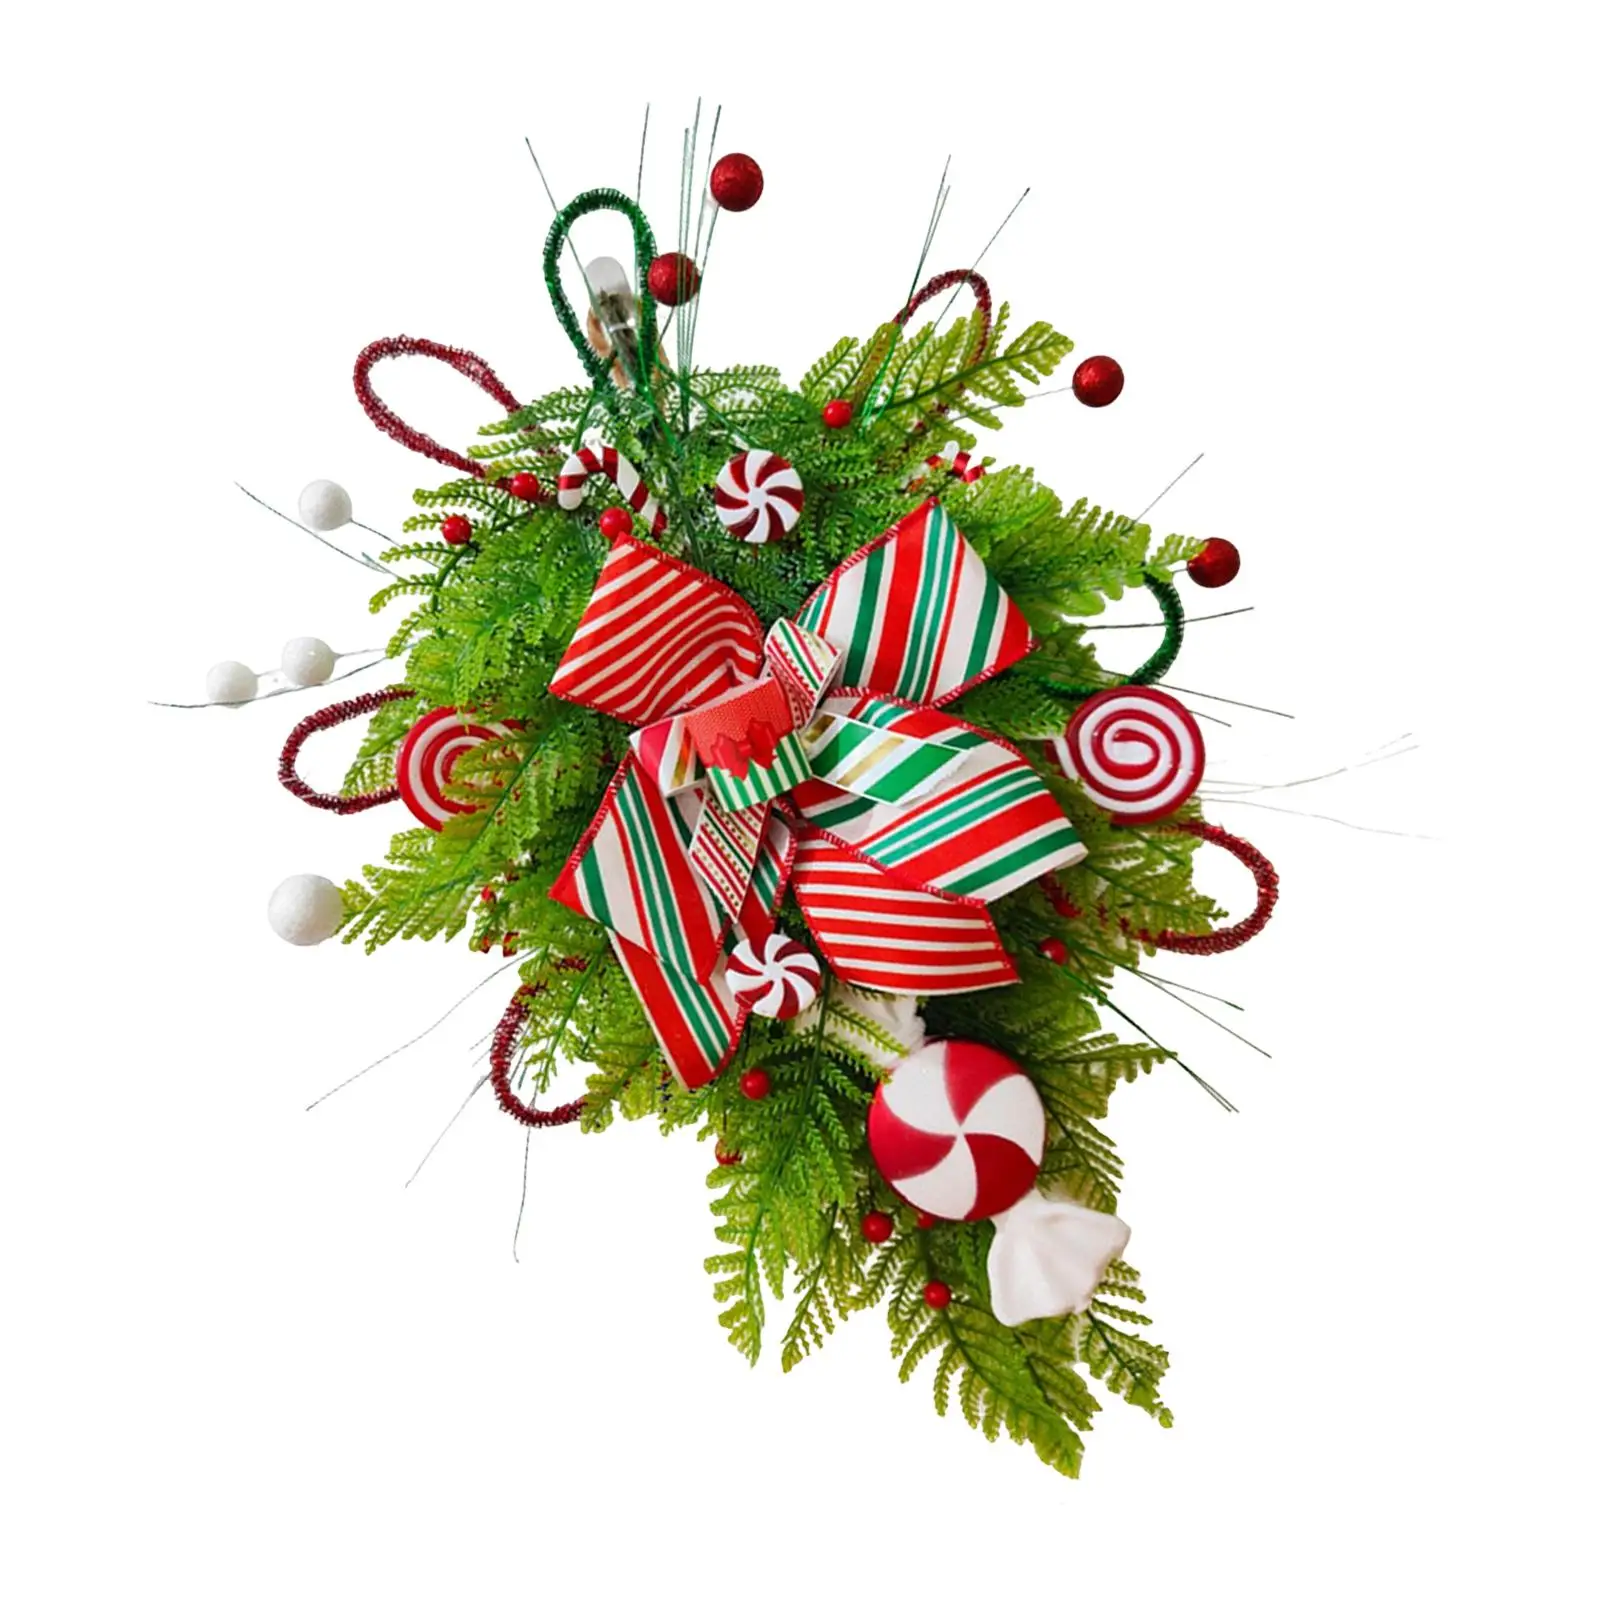 Decorative Christmas Teardrop Wreath for Door Wall Windows for Holiday Decor